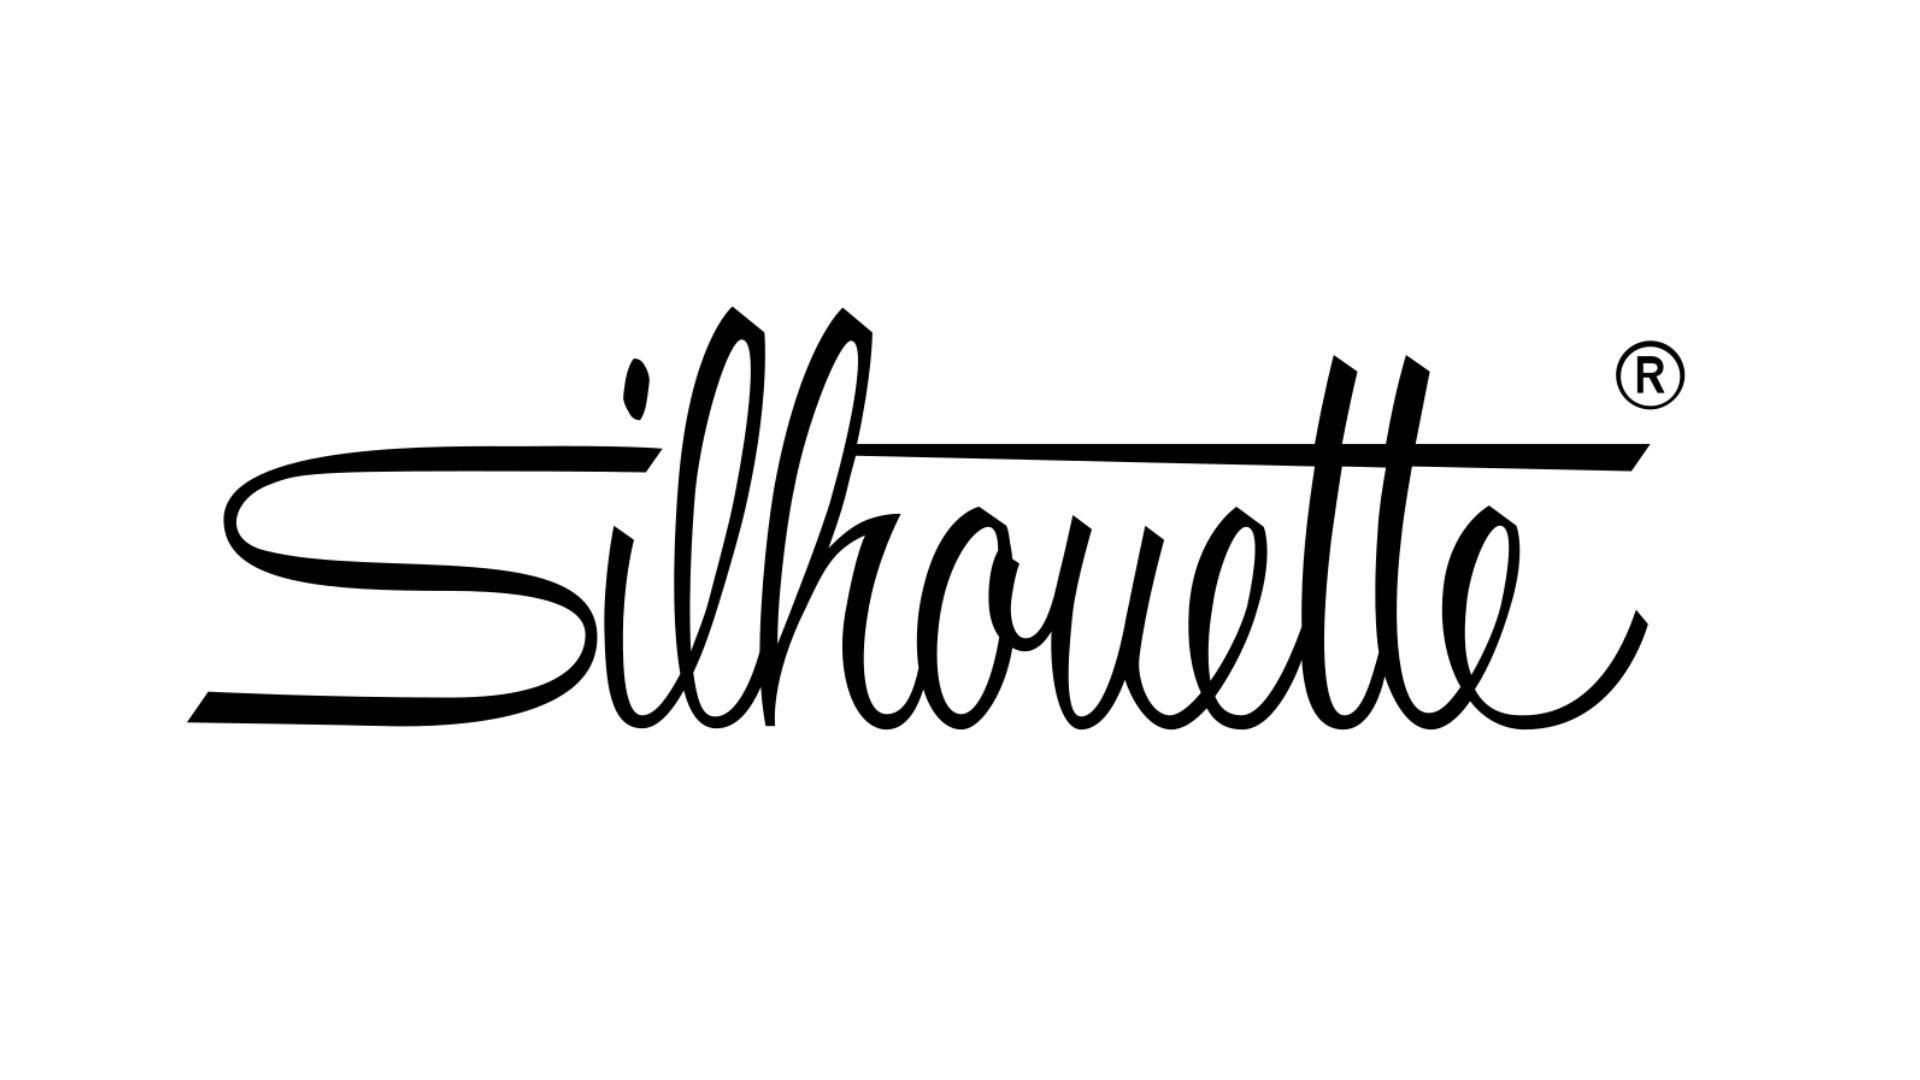 Silhouette Logo con letras negras en un fondo blanco